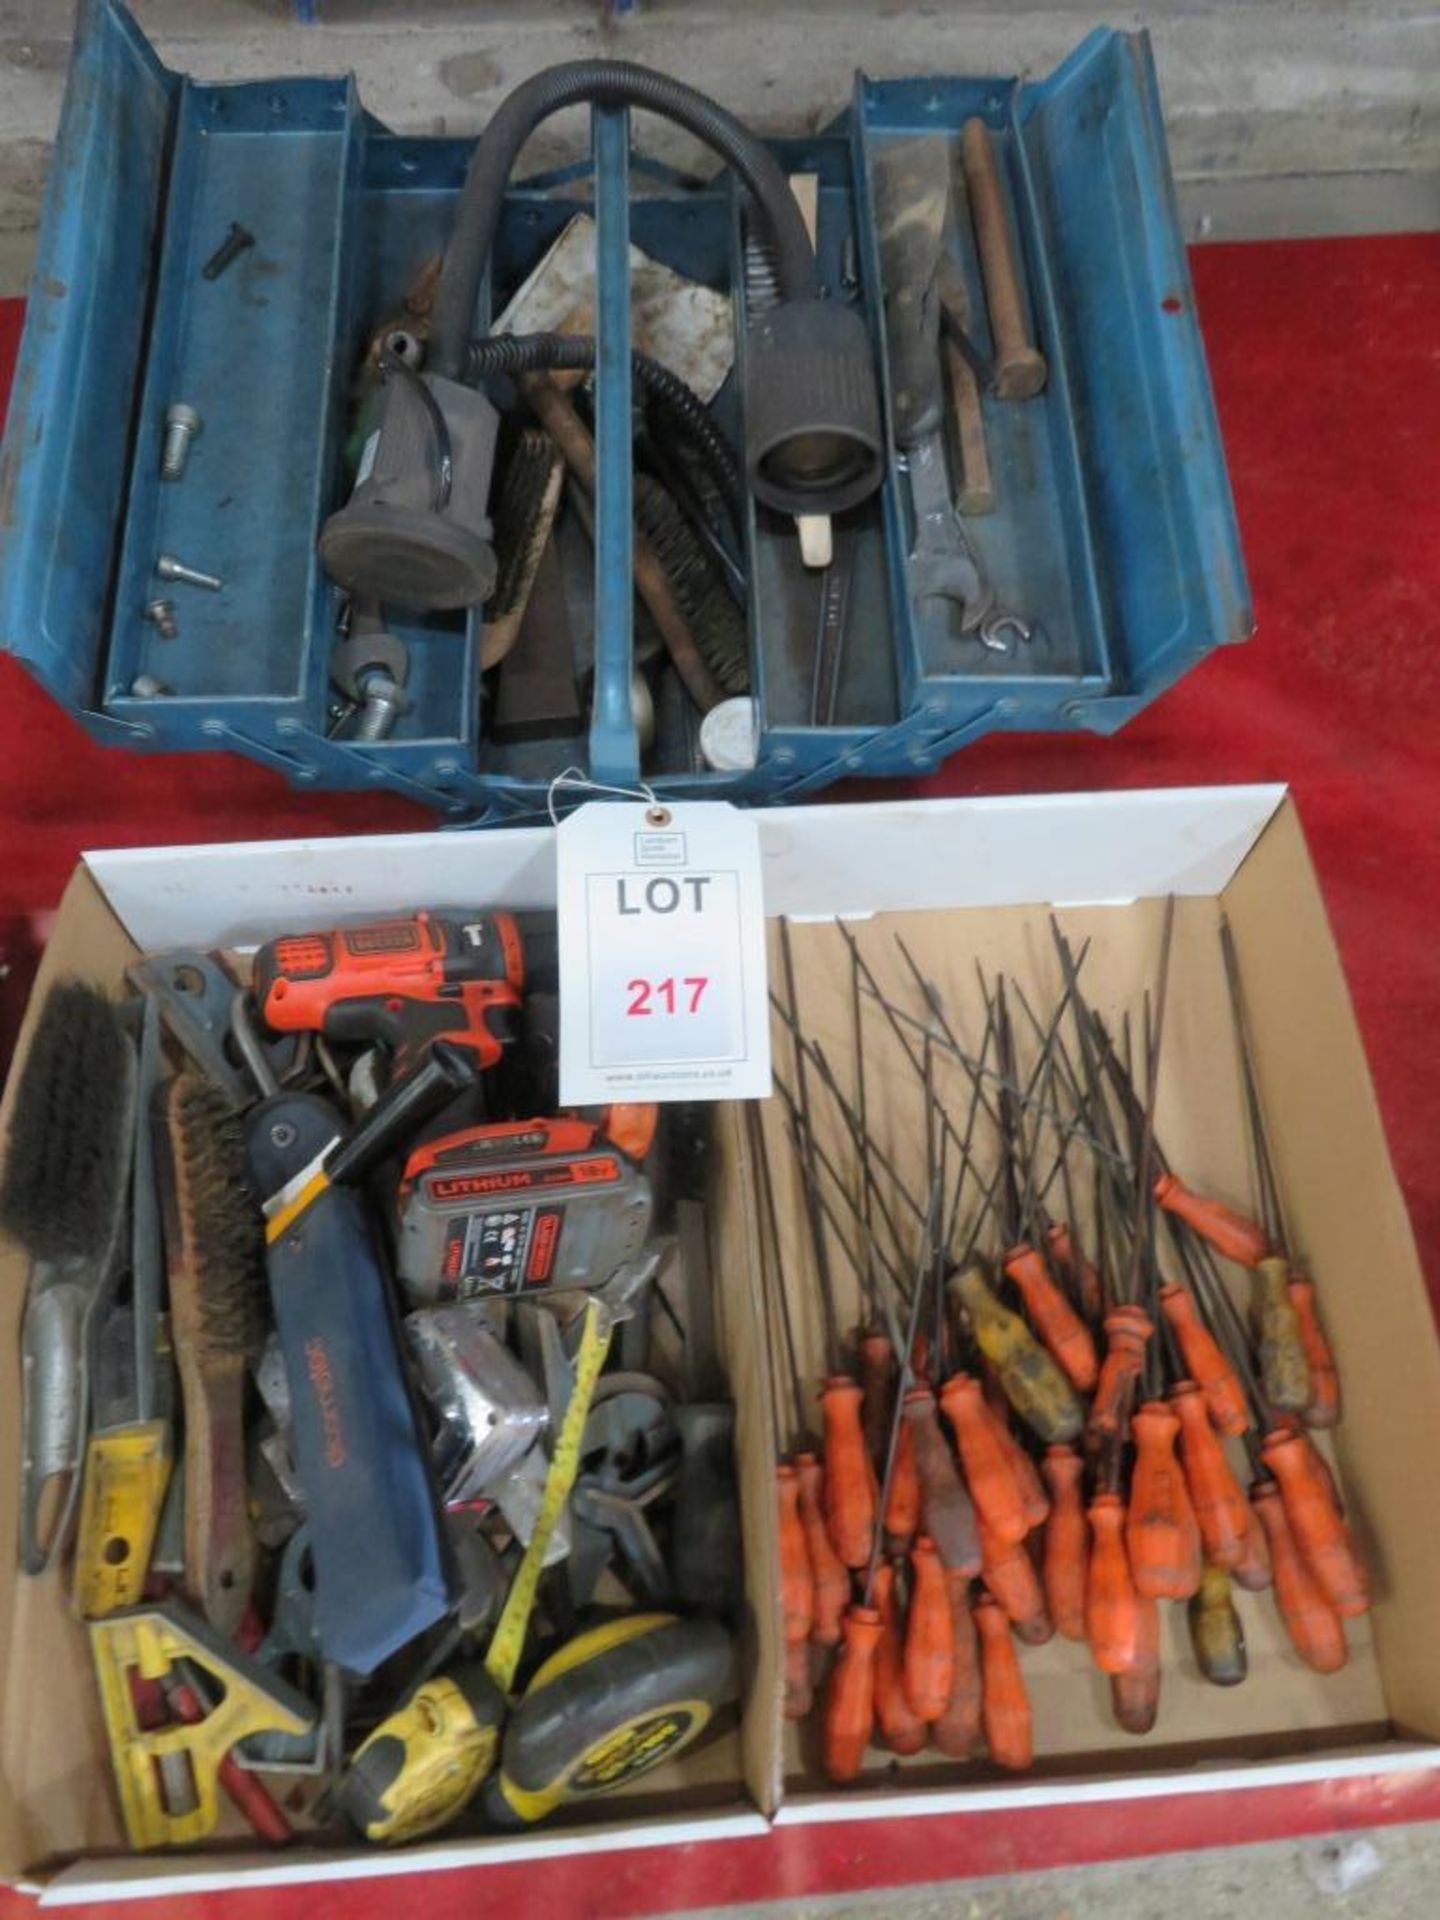 Quantity of hand tools